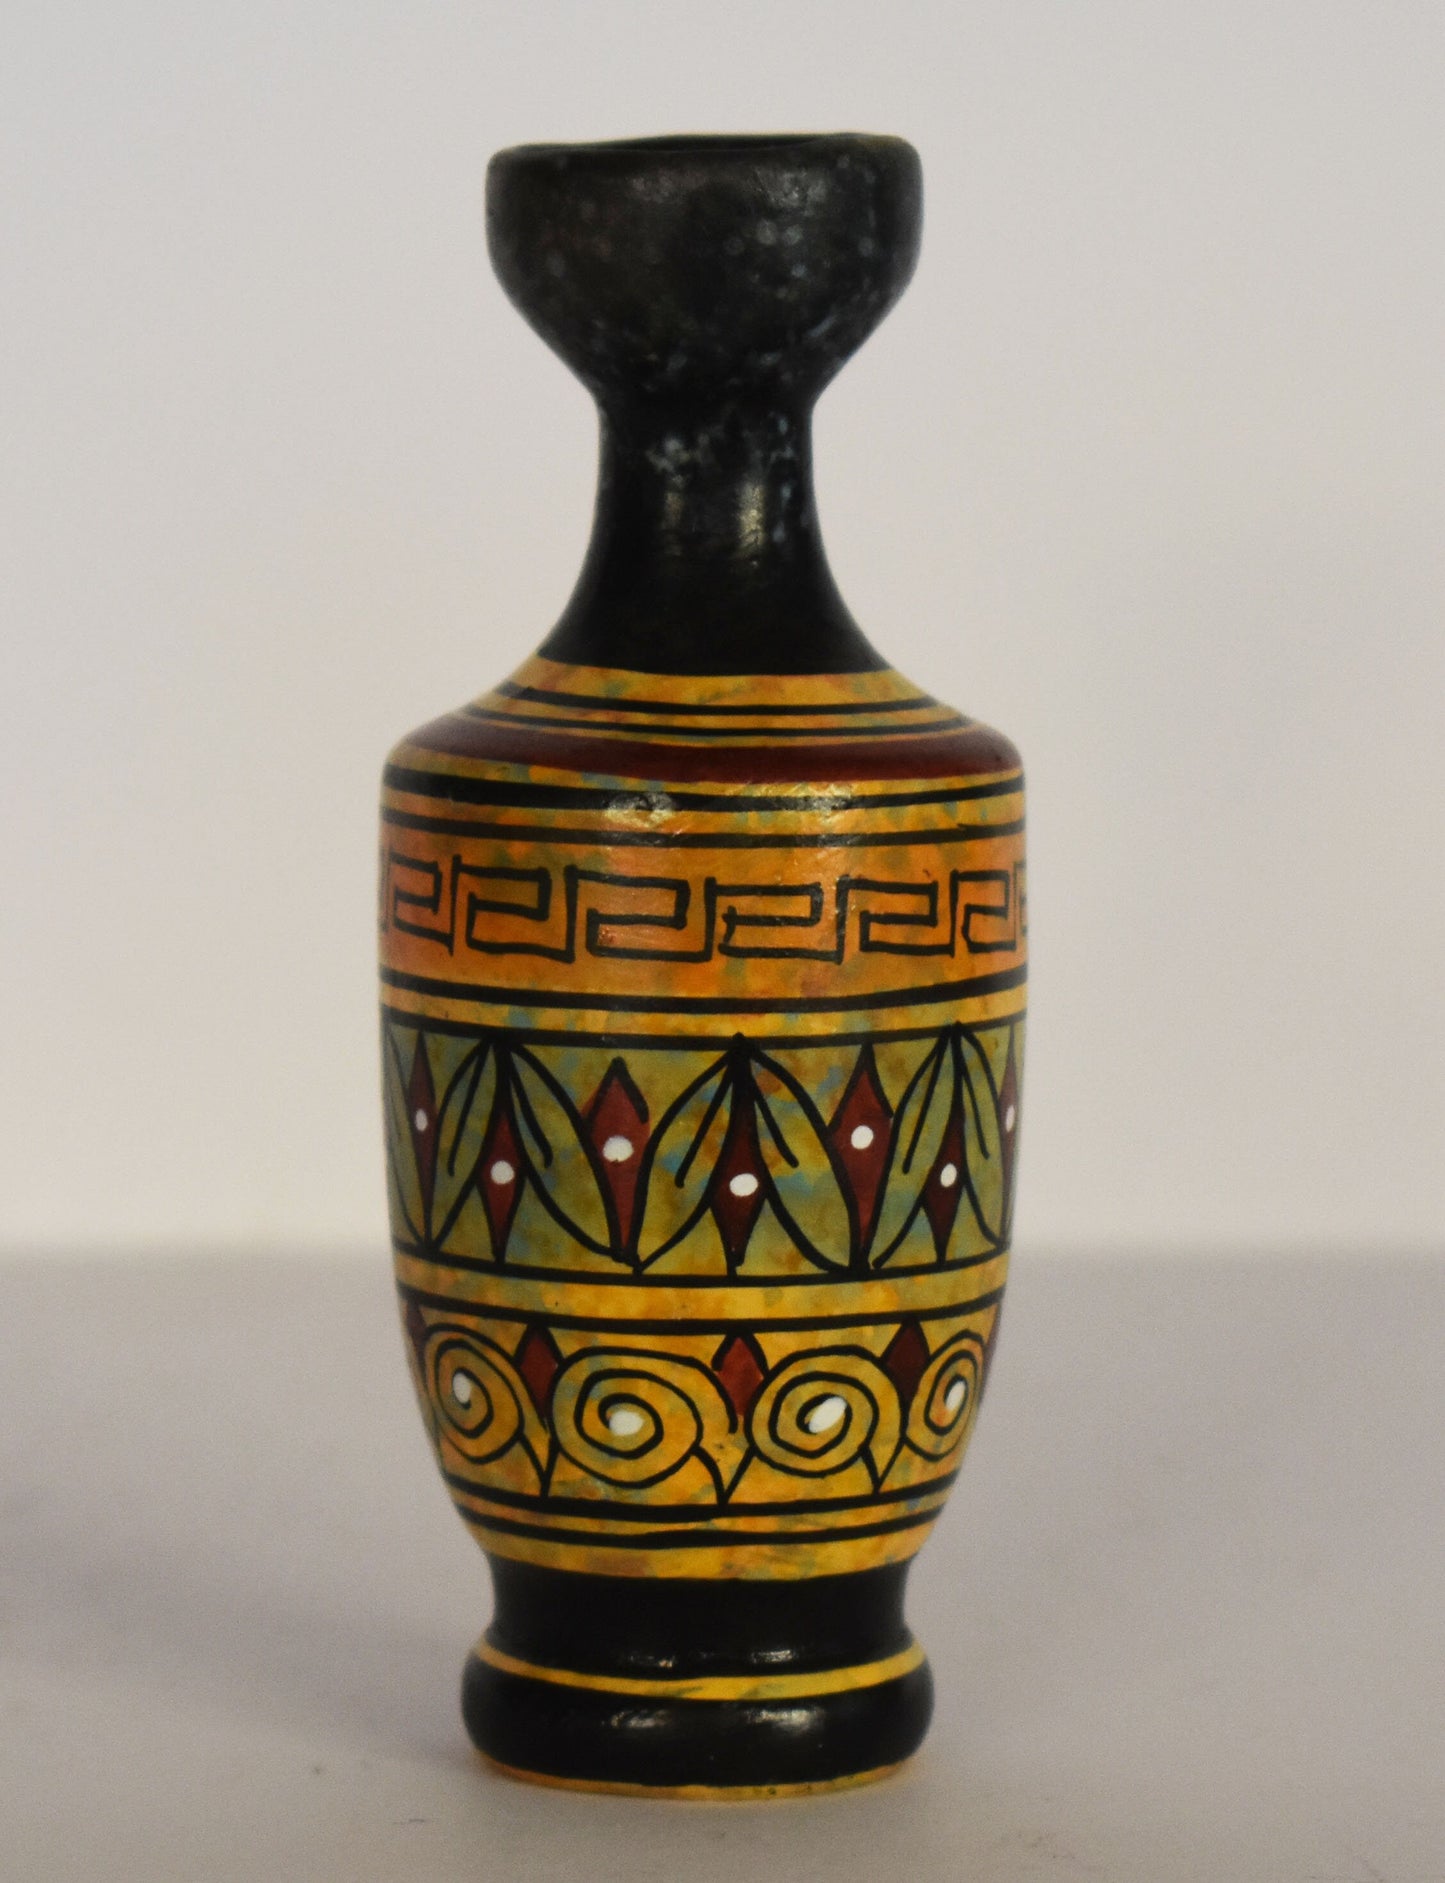 Ancient Greek lekythos - floral decoration - Miniature Ceramic piece - Geometric Period - Handmade in Greece